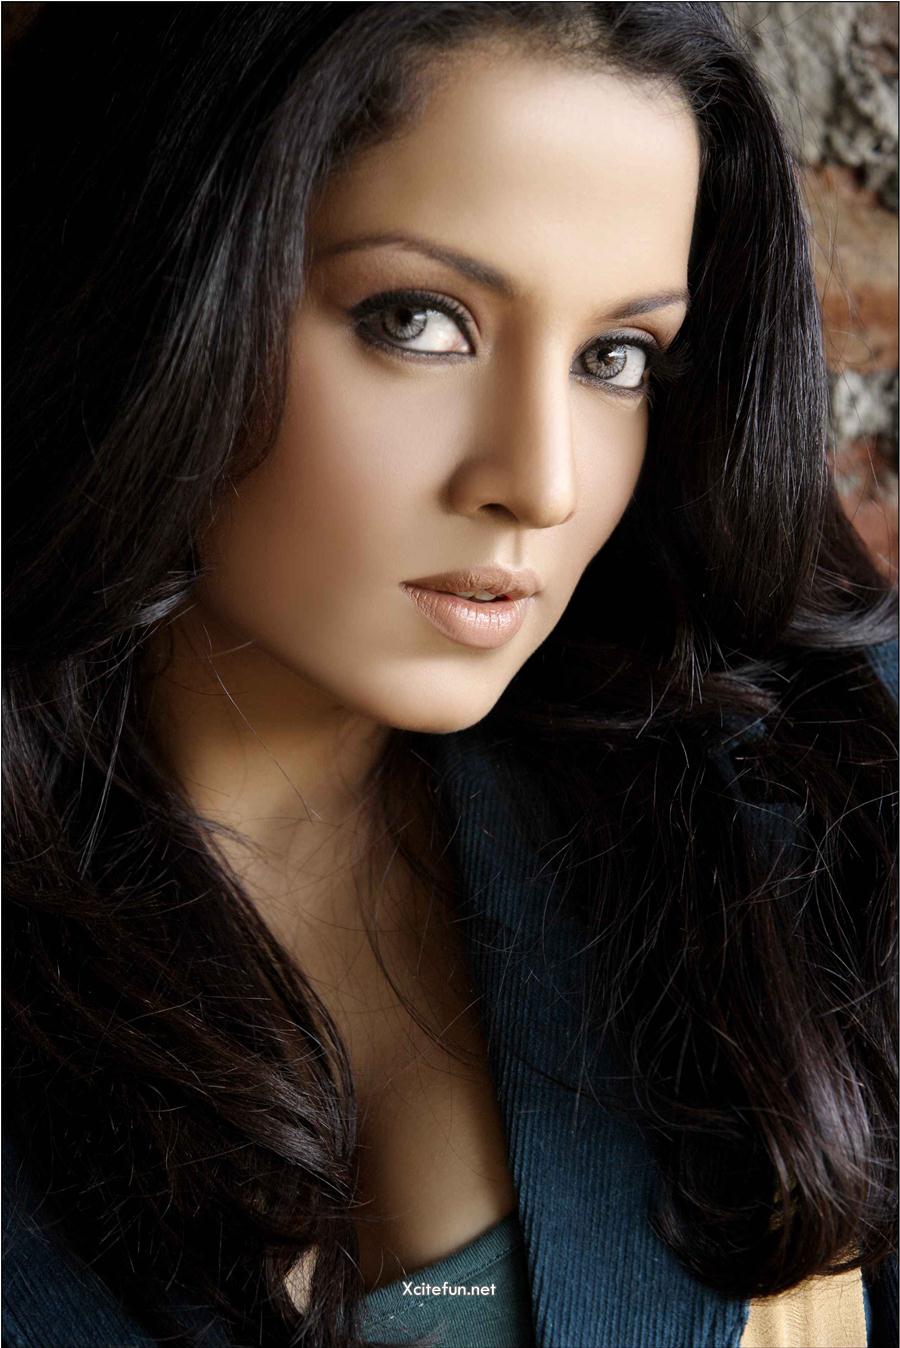 Bollywood Film Star Celina Jaitley Wallpapers - XciteFun.net